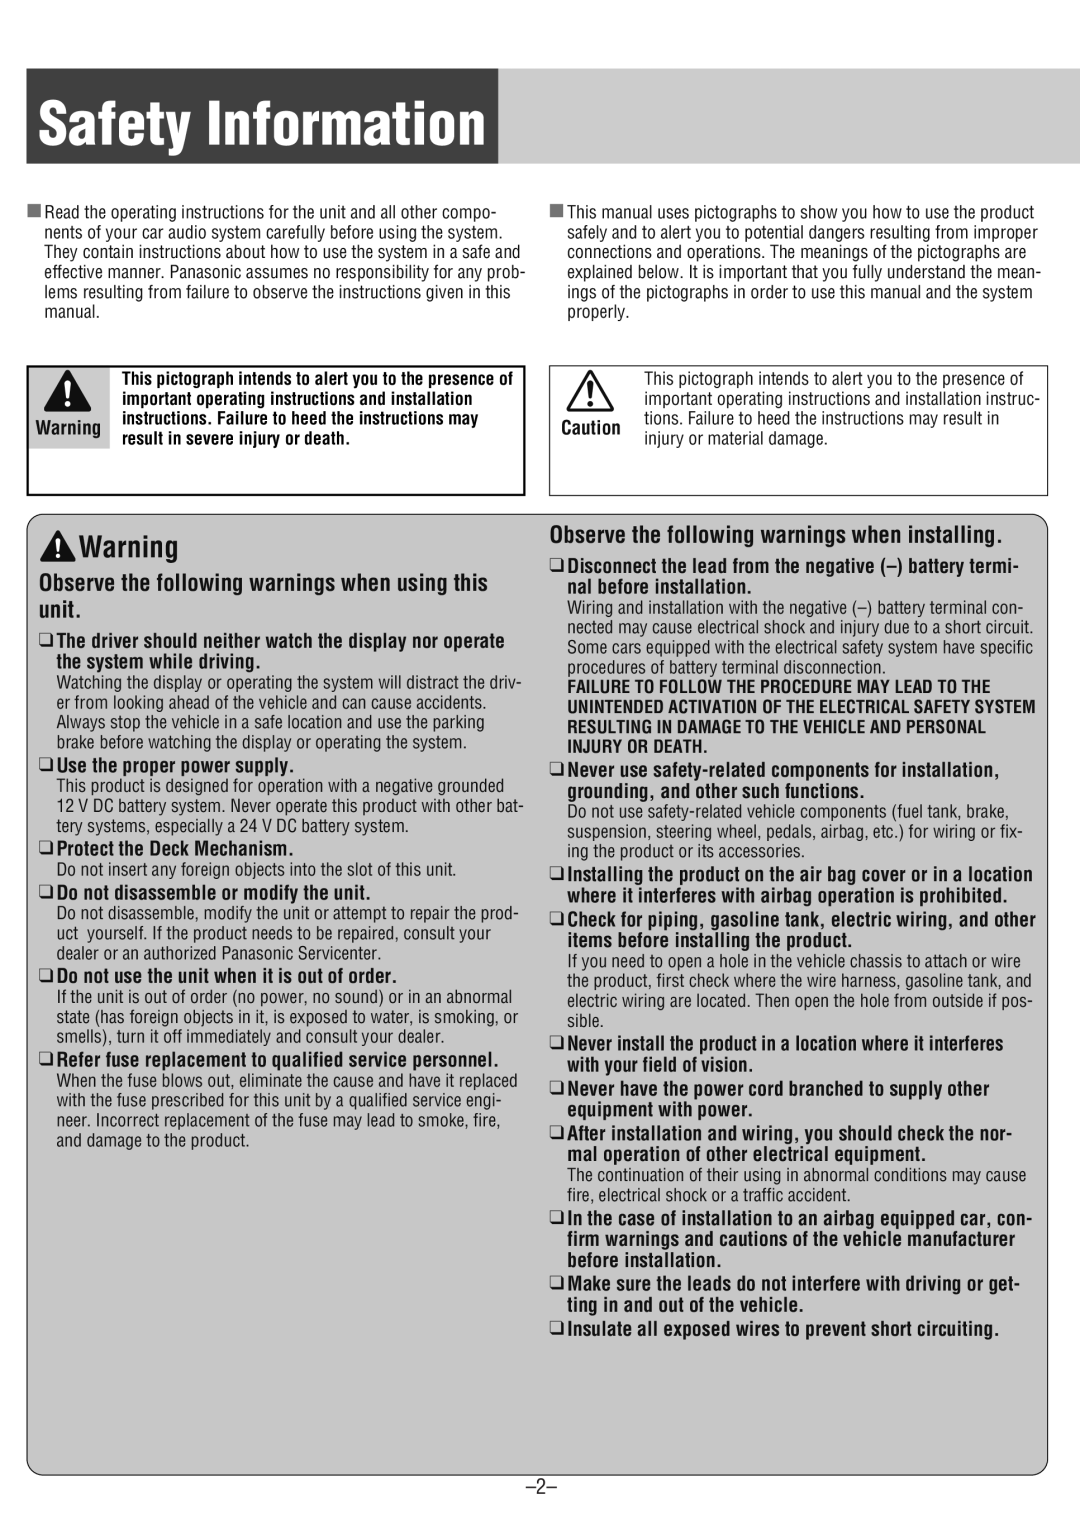 Panasonic CQ-CM130U warranty Safety Information, Observe the following warnings when installing 